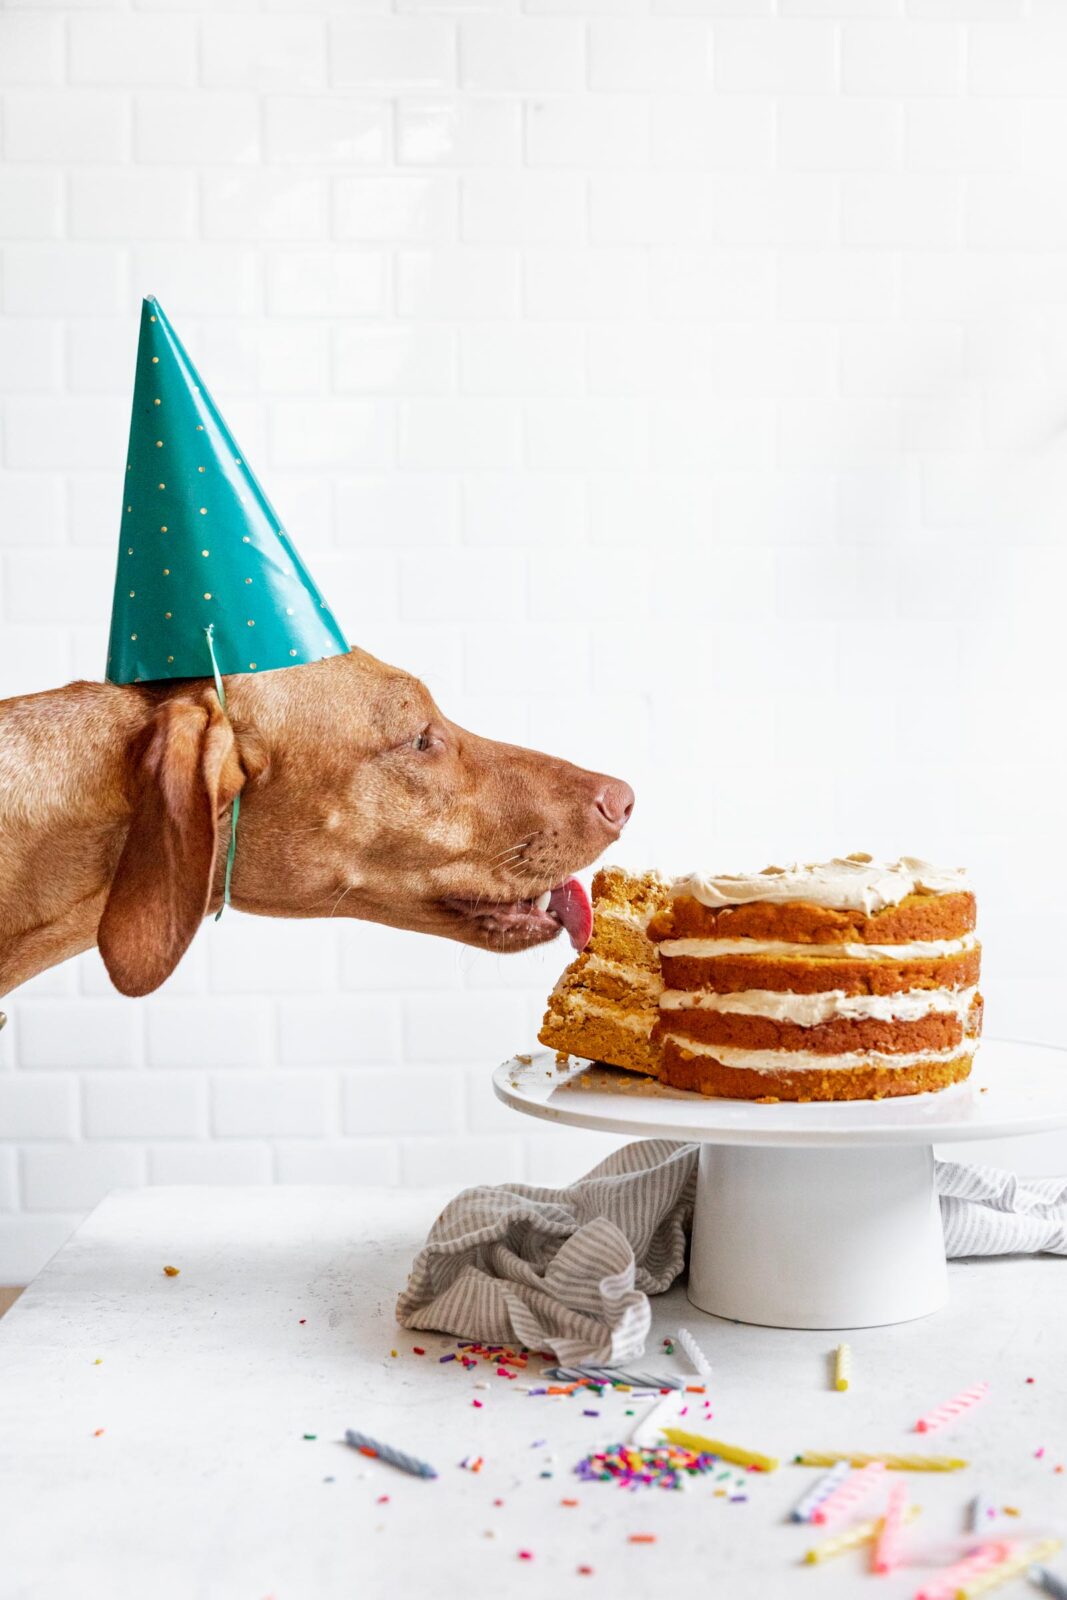 Dog eating a birthday cake